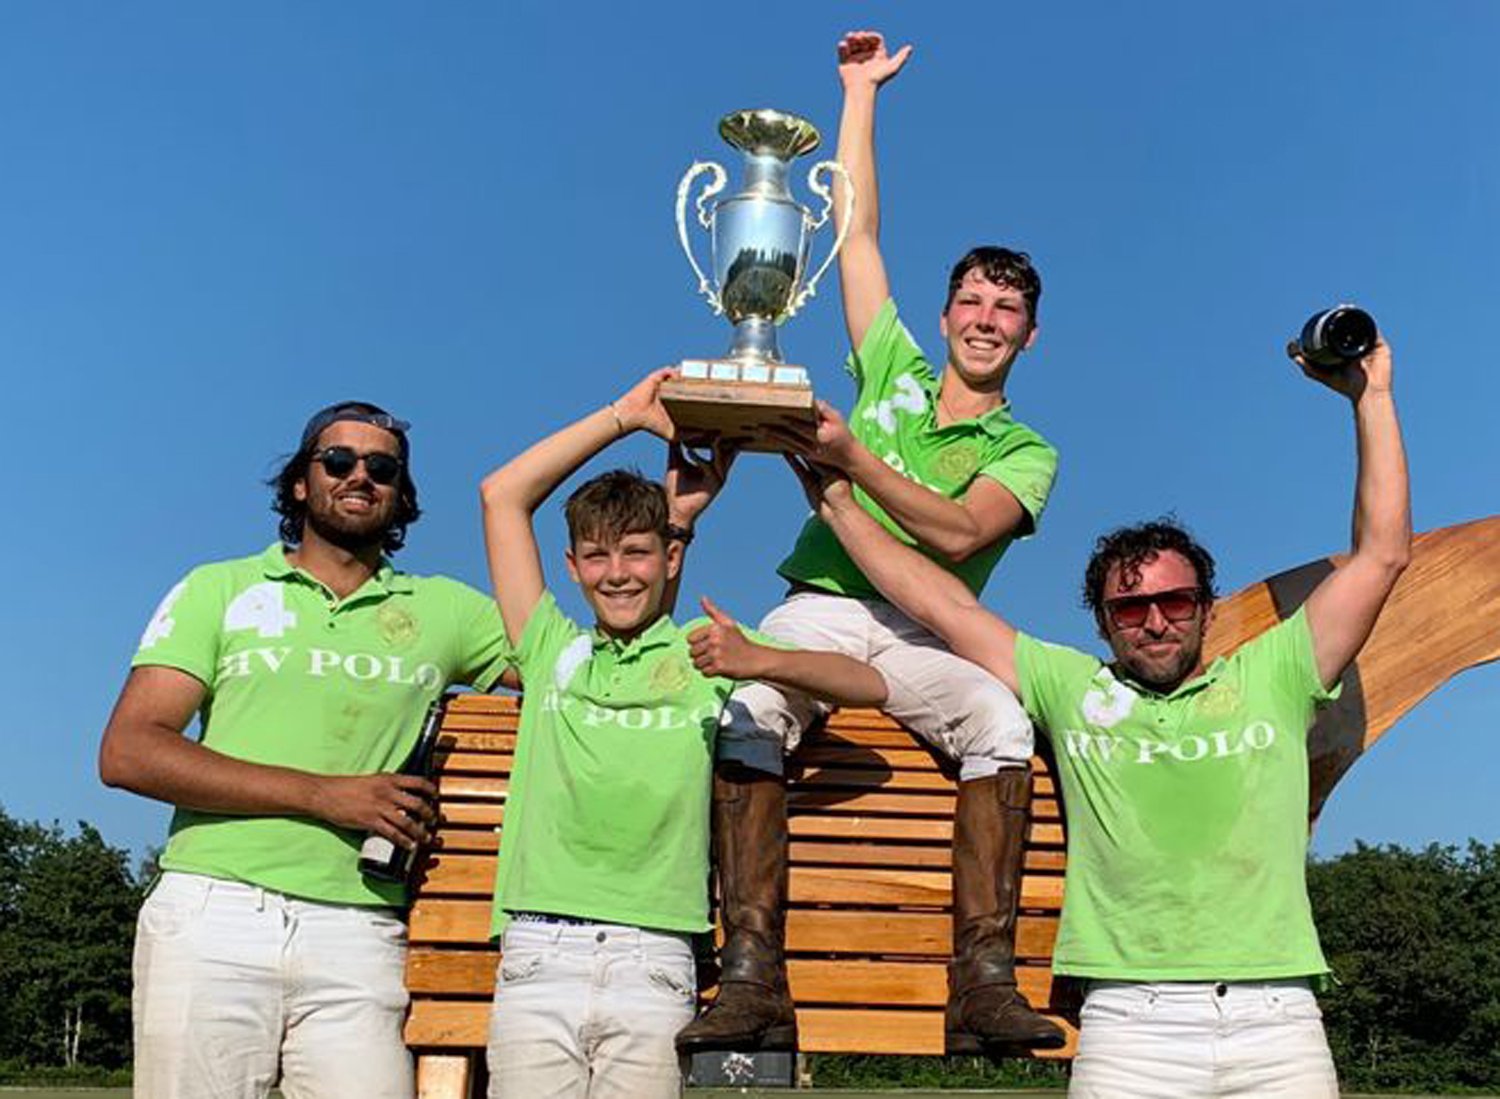 HV POLO wins the Argentine Polo Days 2021 !